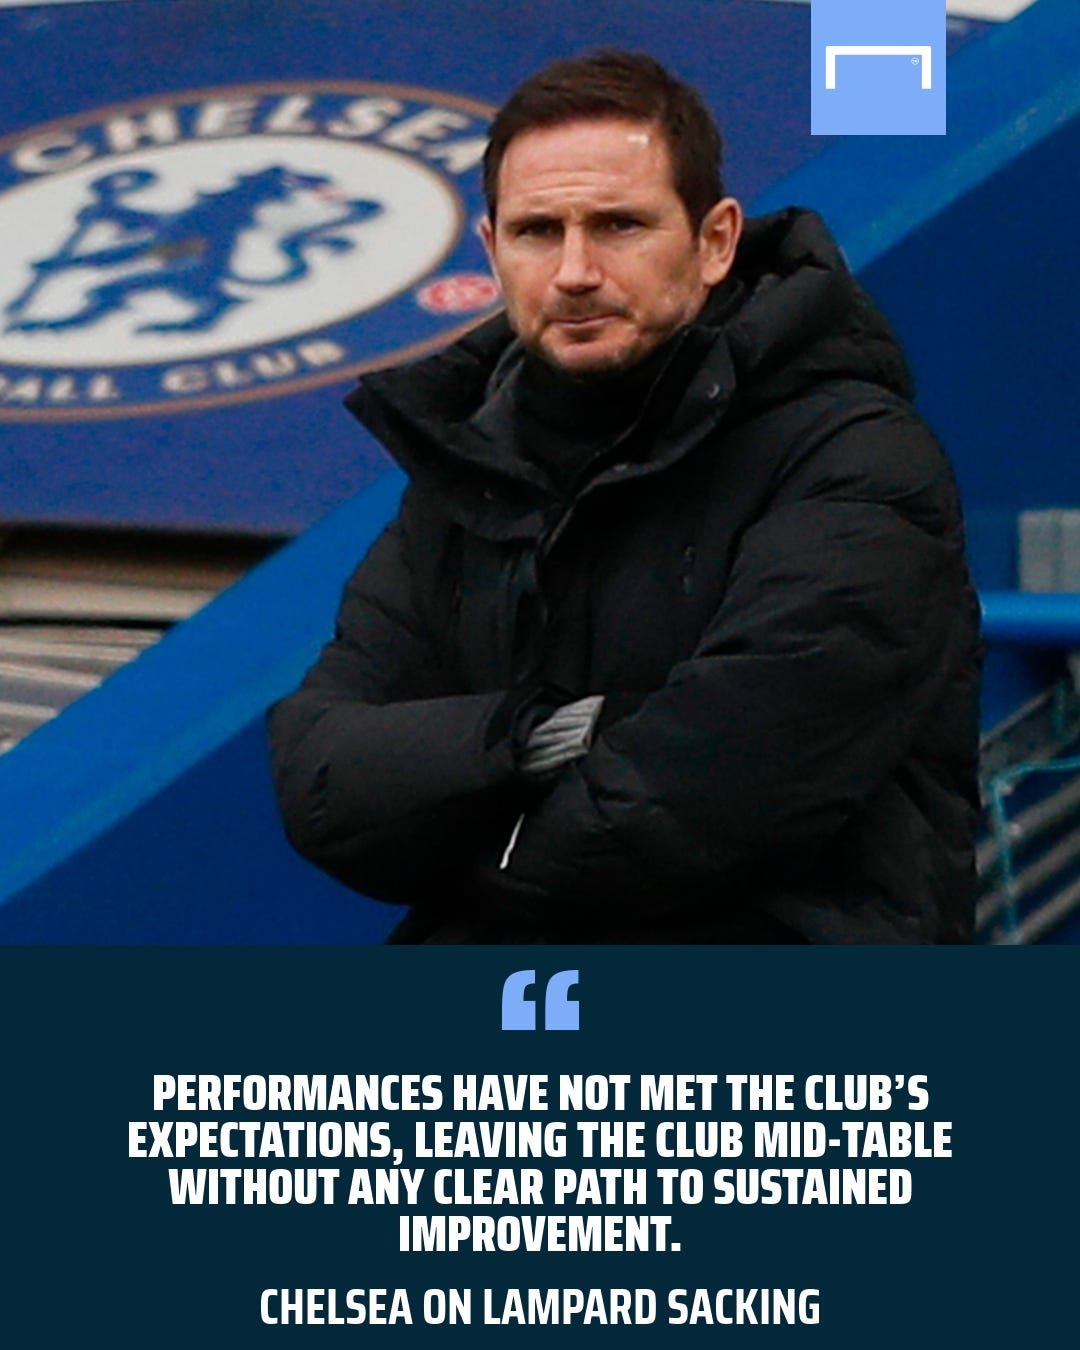 Lampard sacking quote GFX